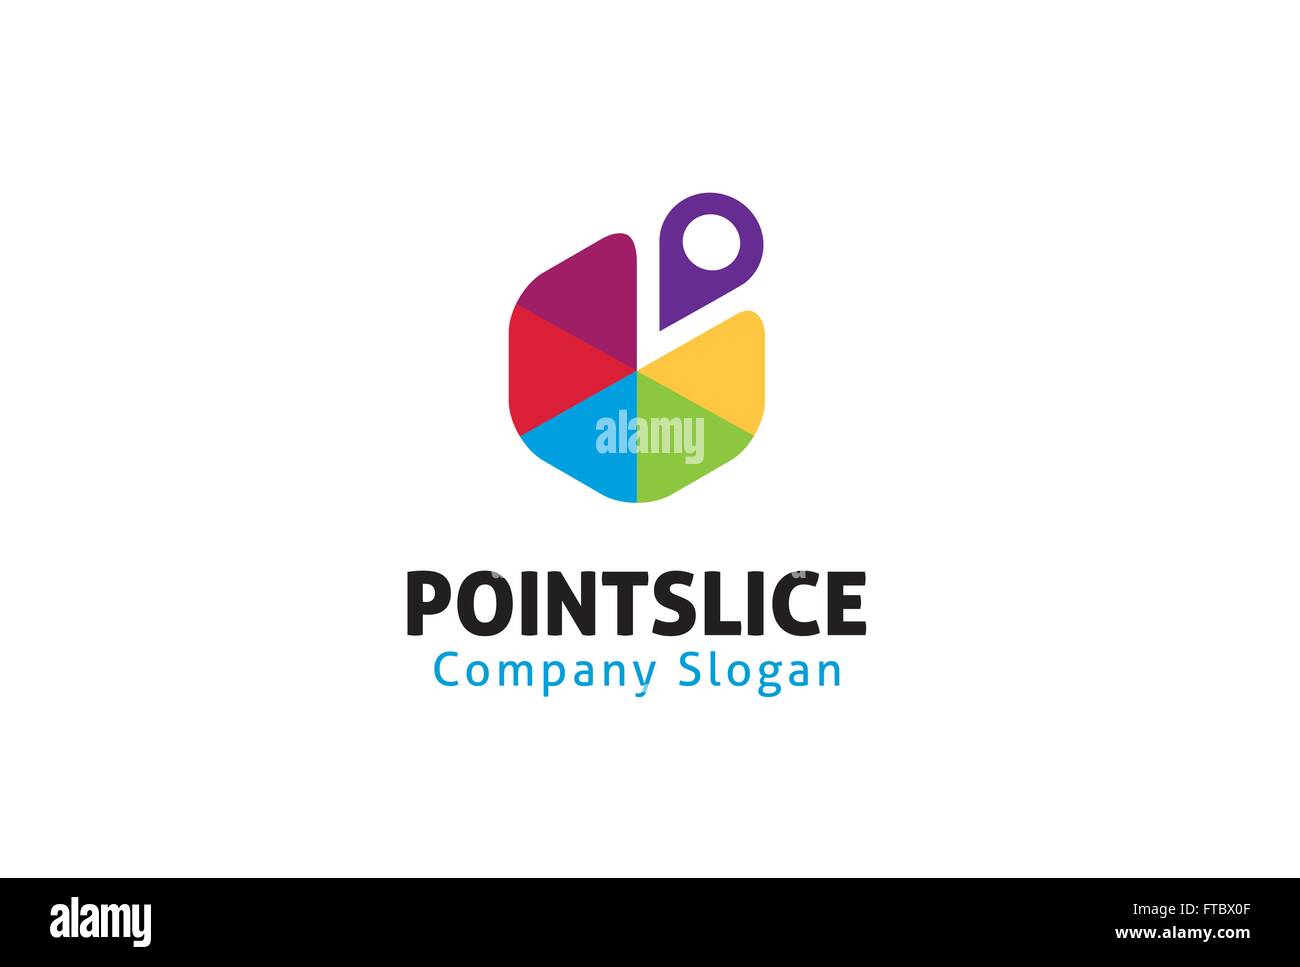 Point Slice Design Illustration Stock Vector